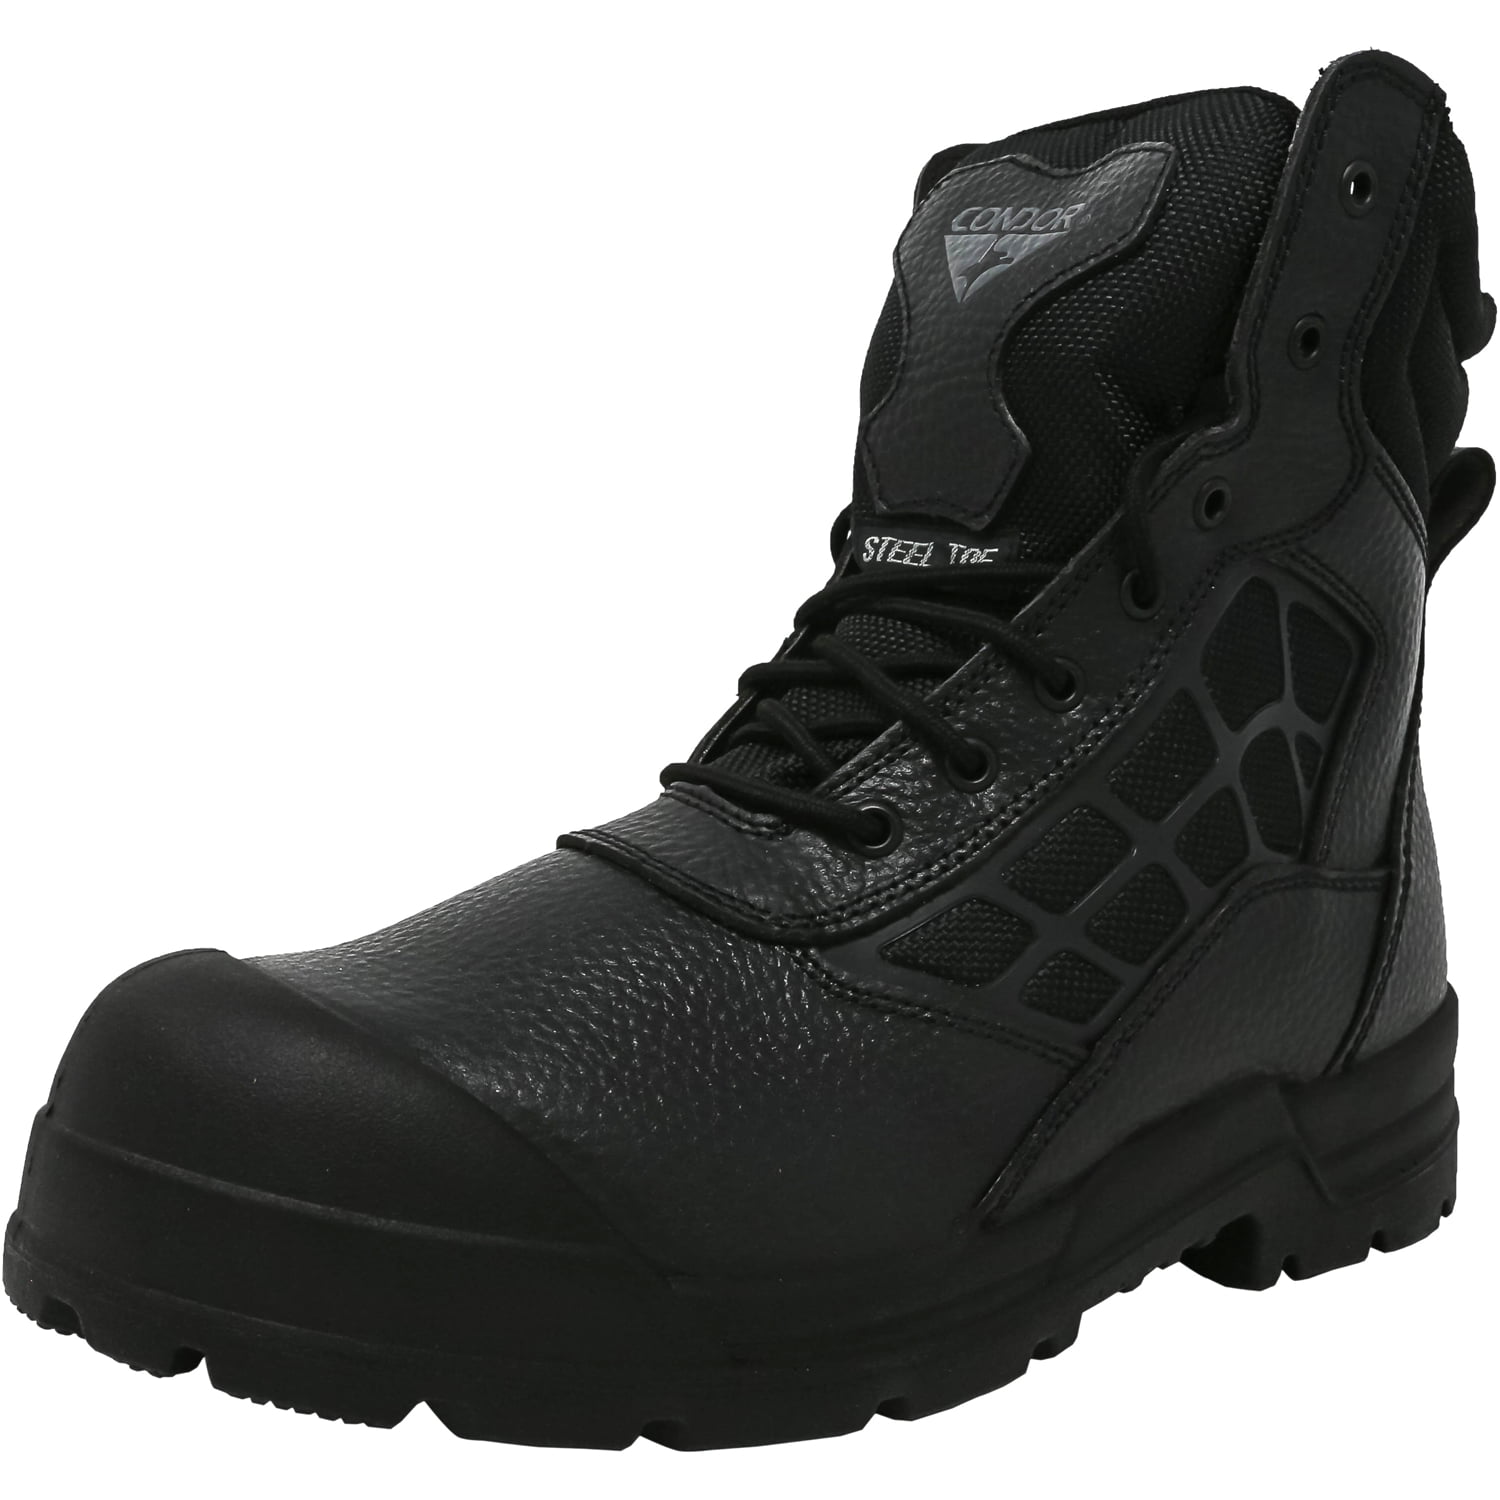 Condor Men's 8 Inch Steel Toe Work Boot Black High-Top Leather - 8M ...